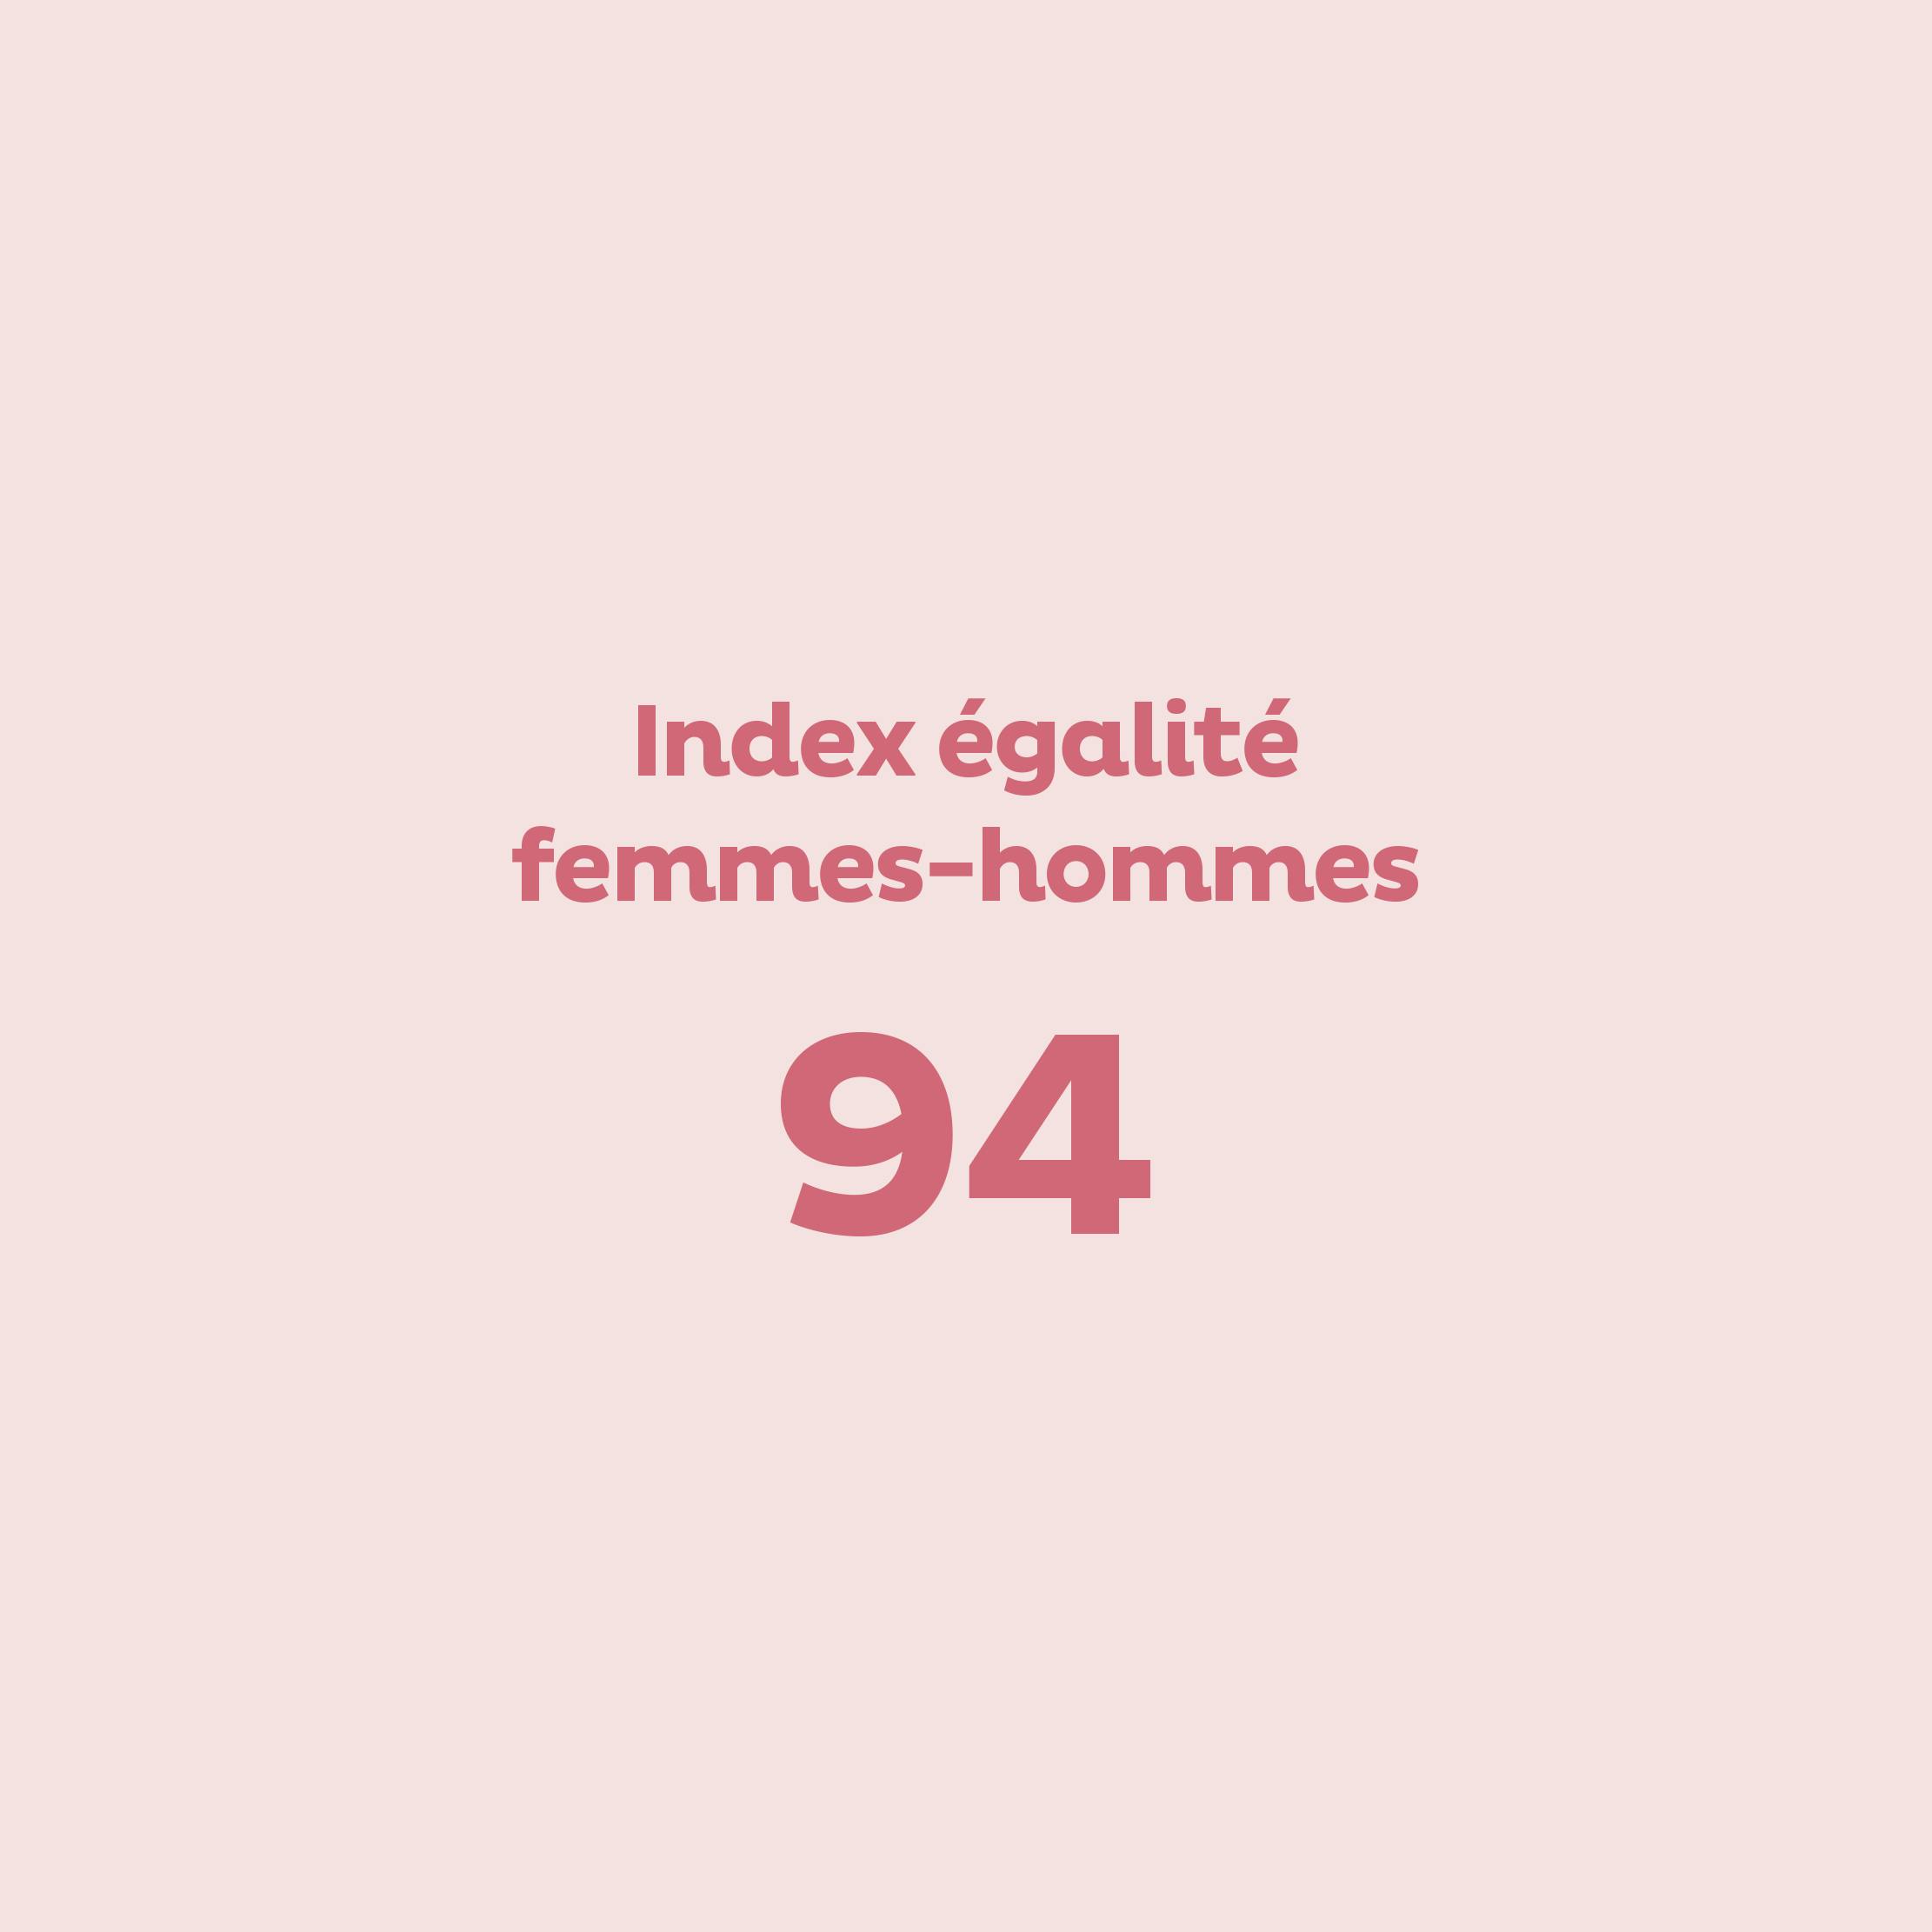 Index égalité femmes-hommes : 94